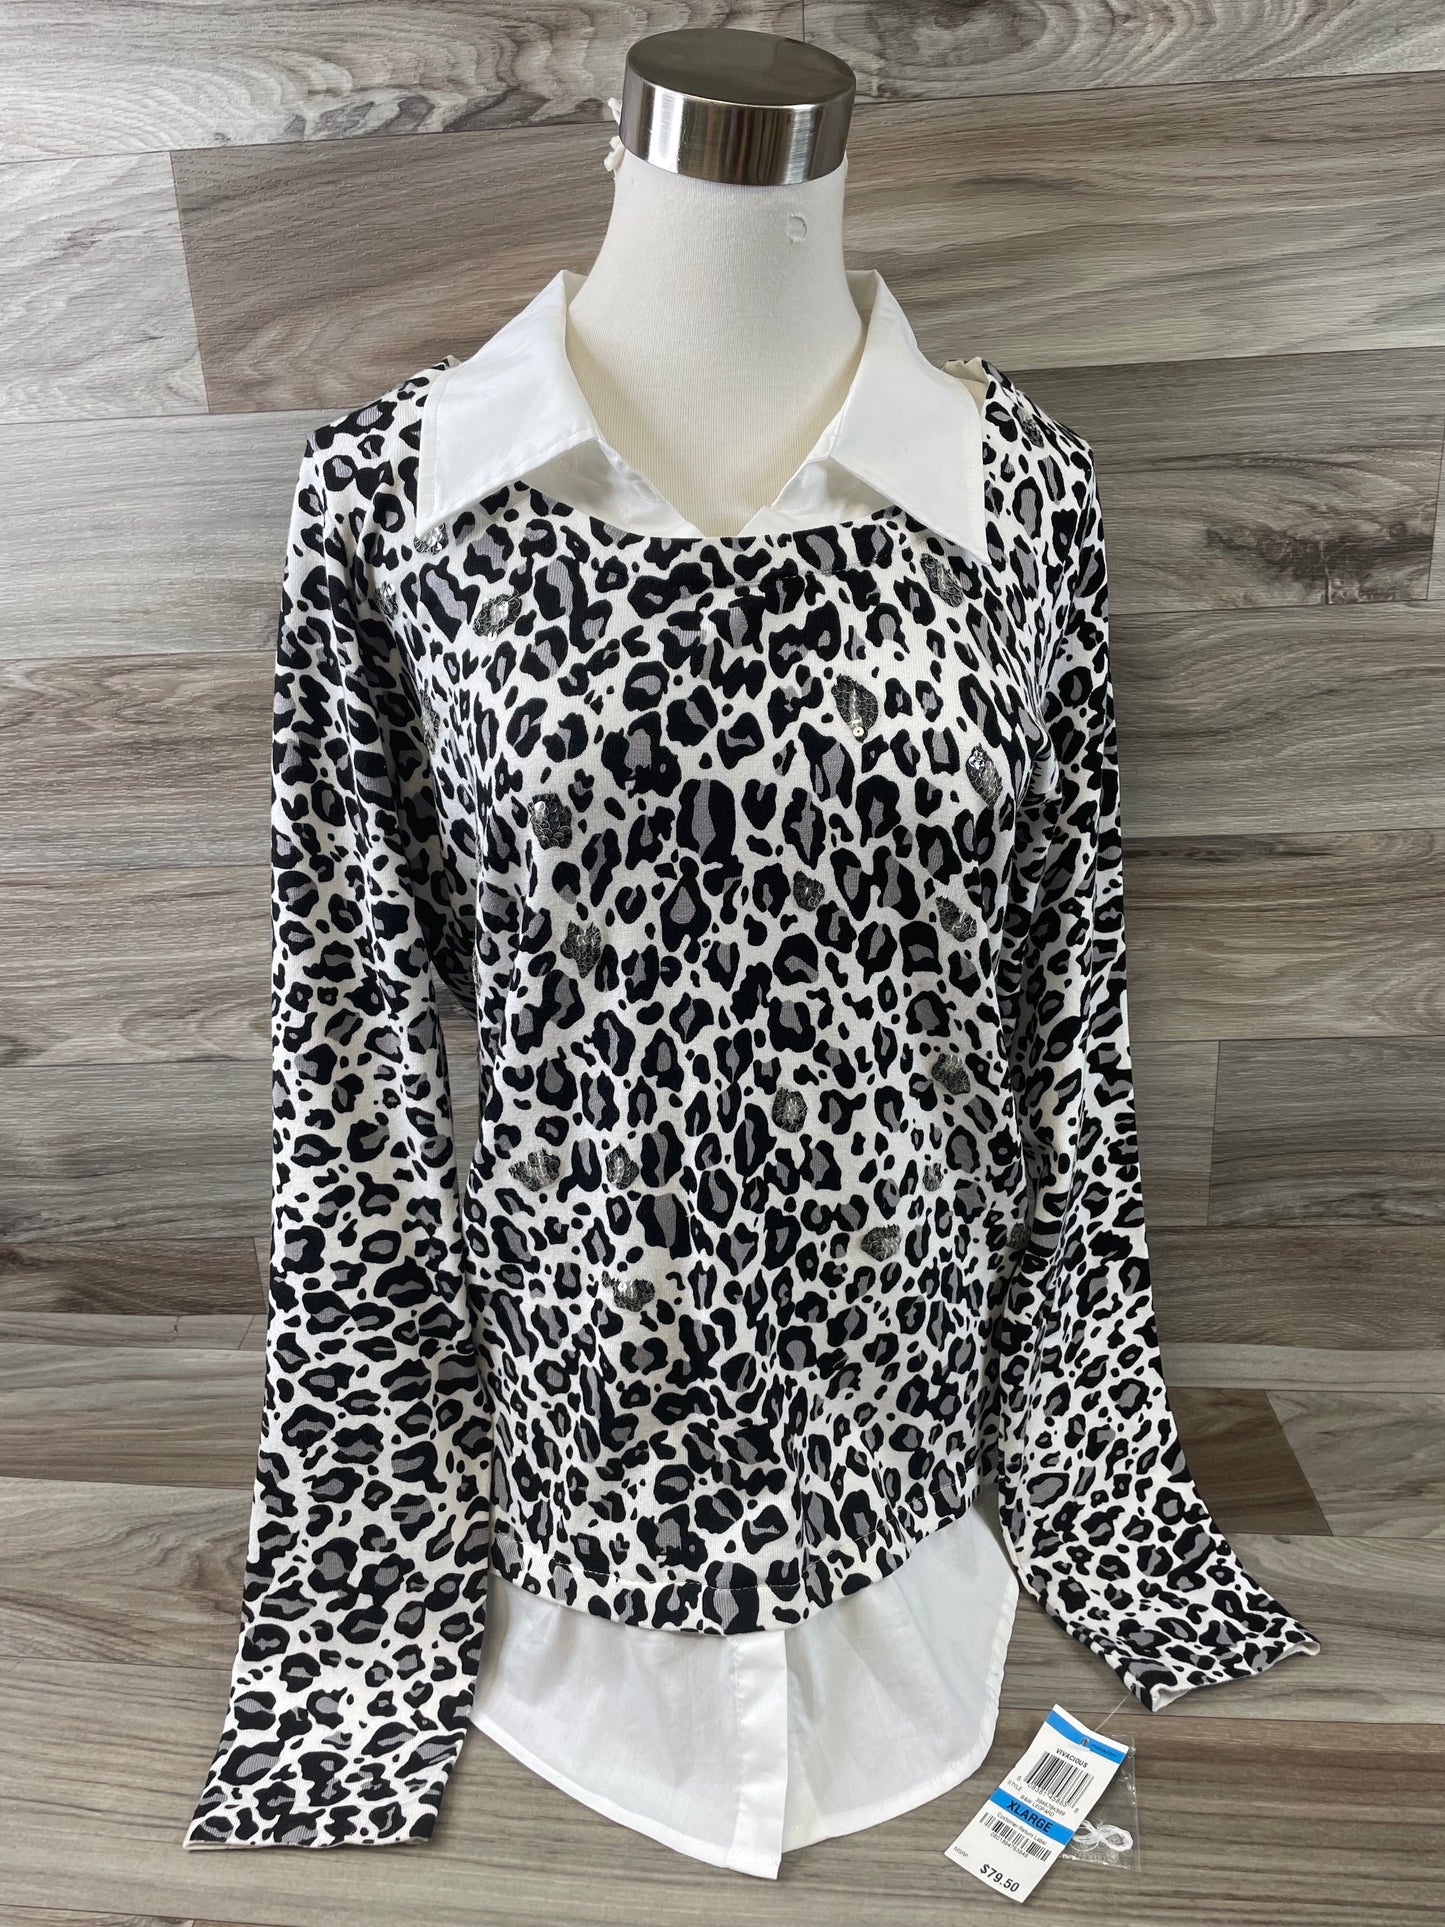 Leopard Print Top Long Sleeve Inc, Size Xl